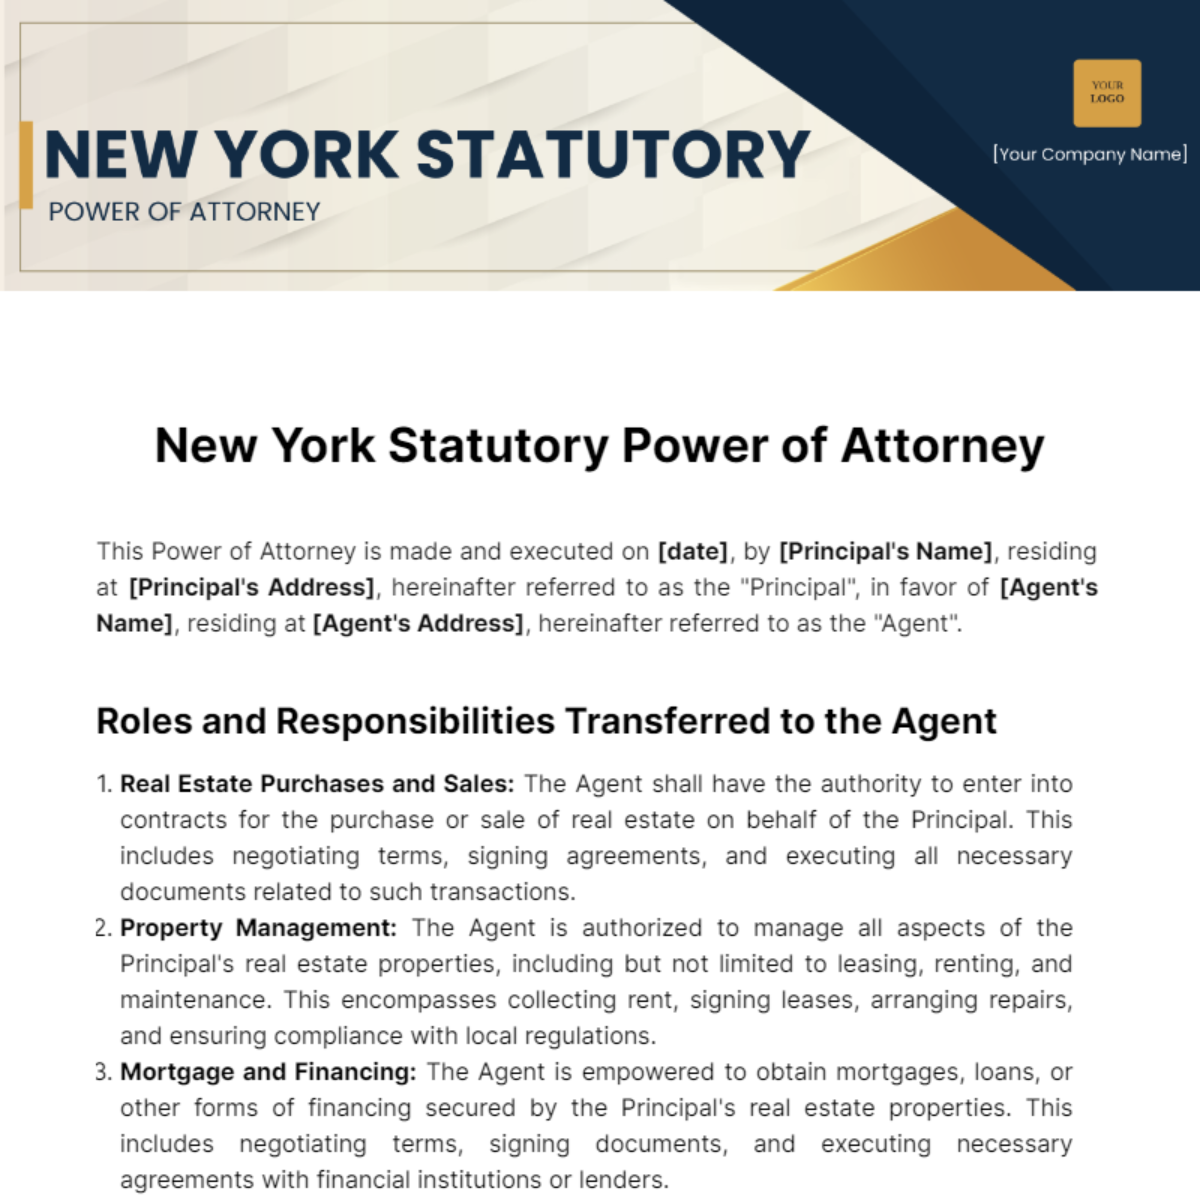 New York Statutory Power of Attorney Template